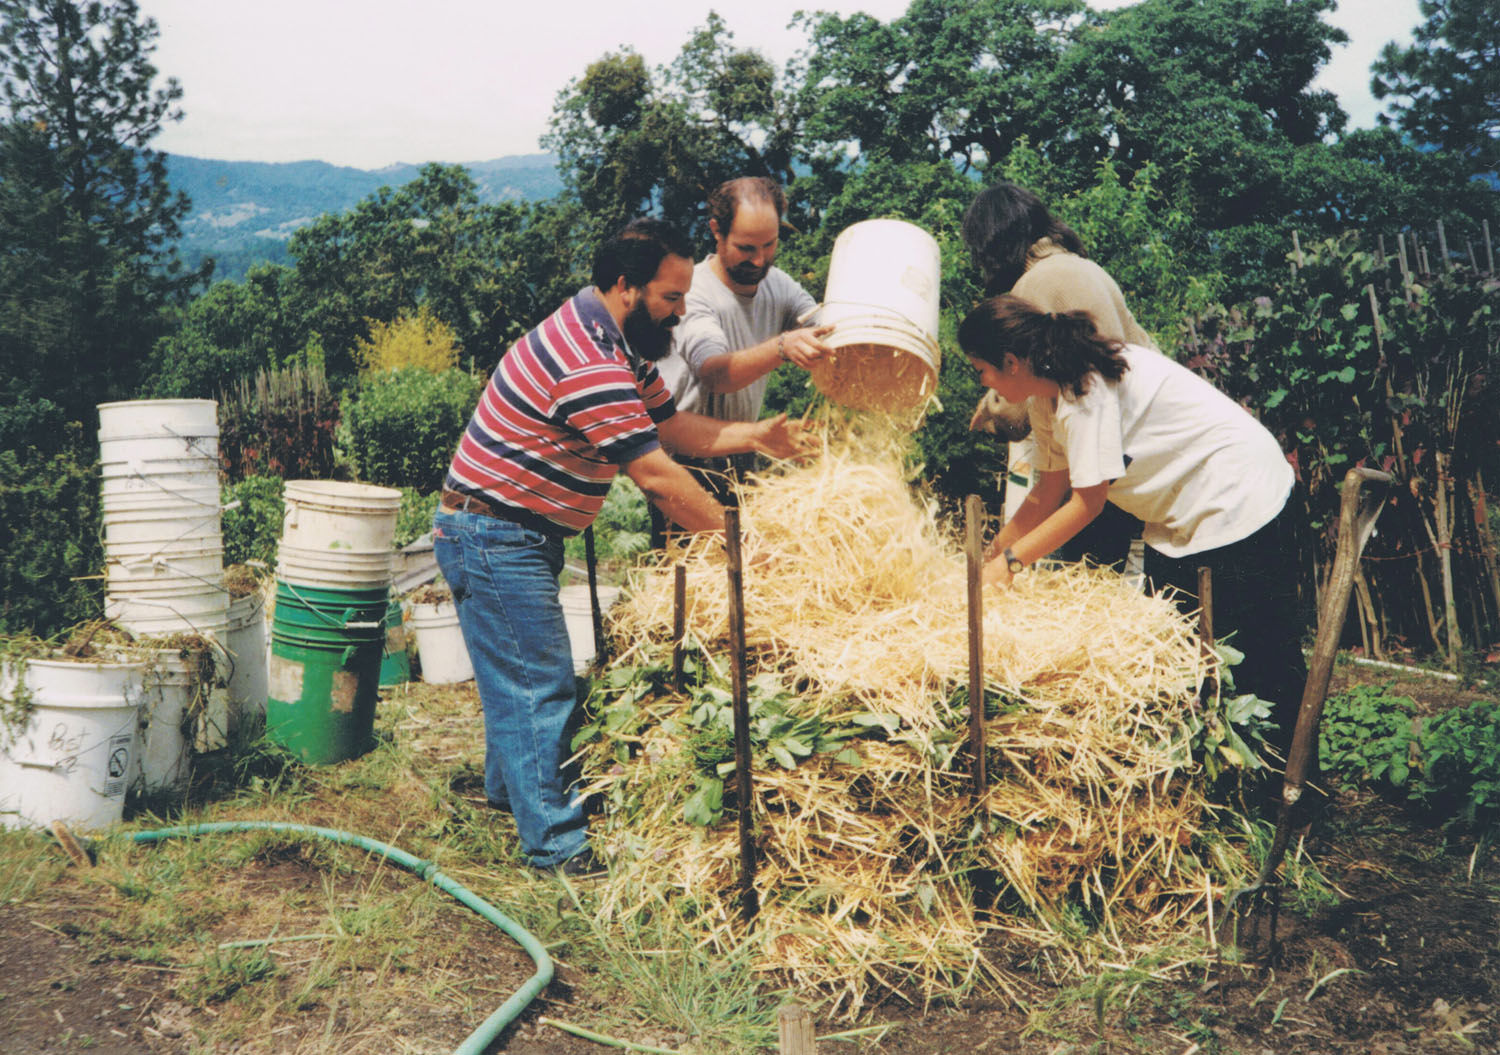 Workshop participants build a GB compost pile in Ecuador